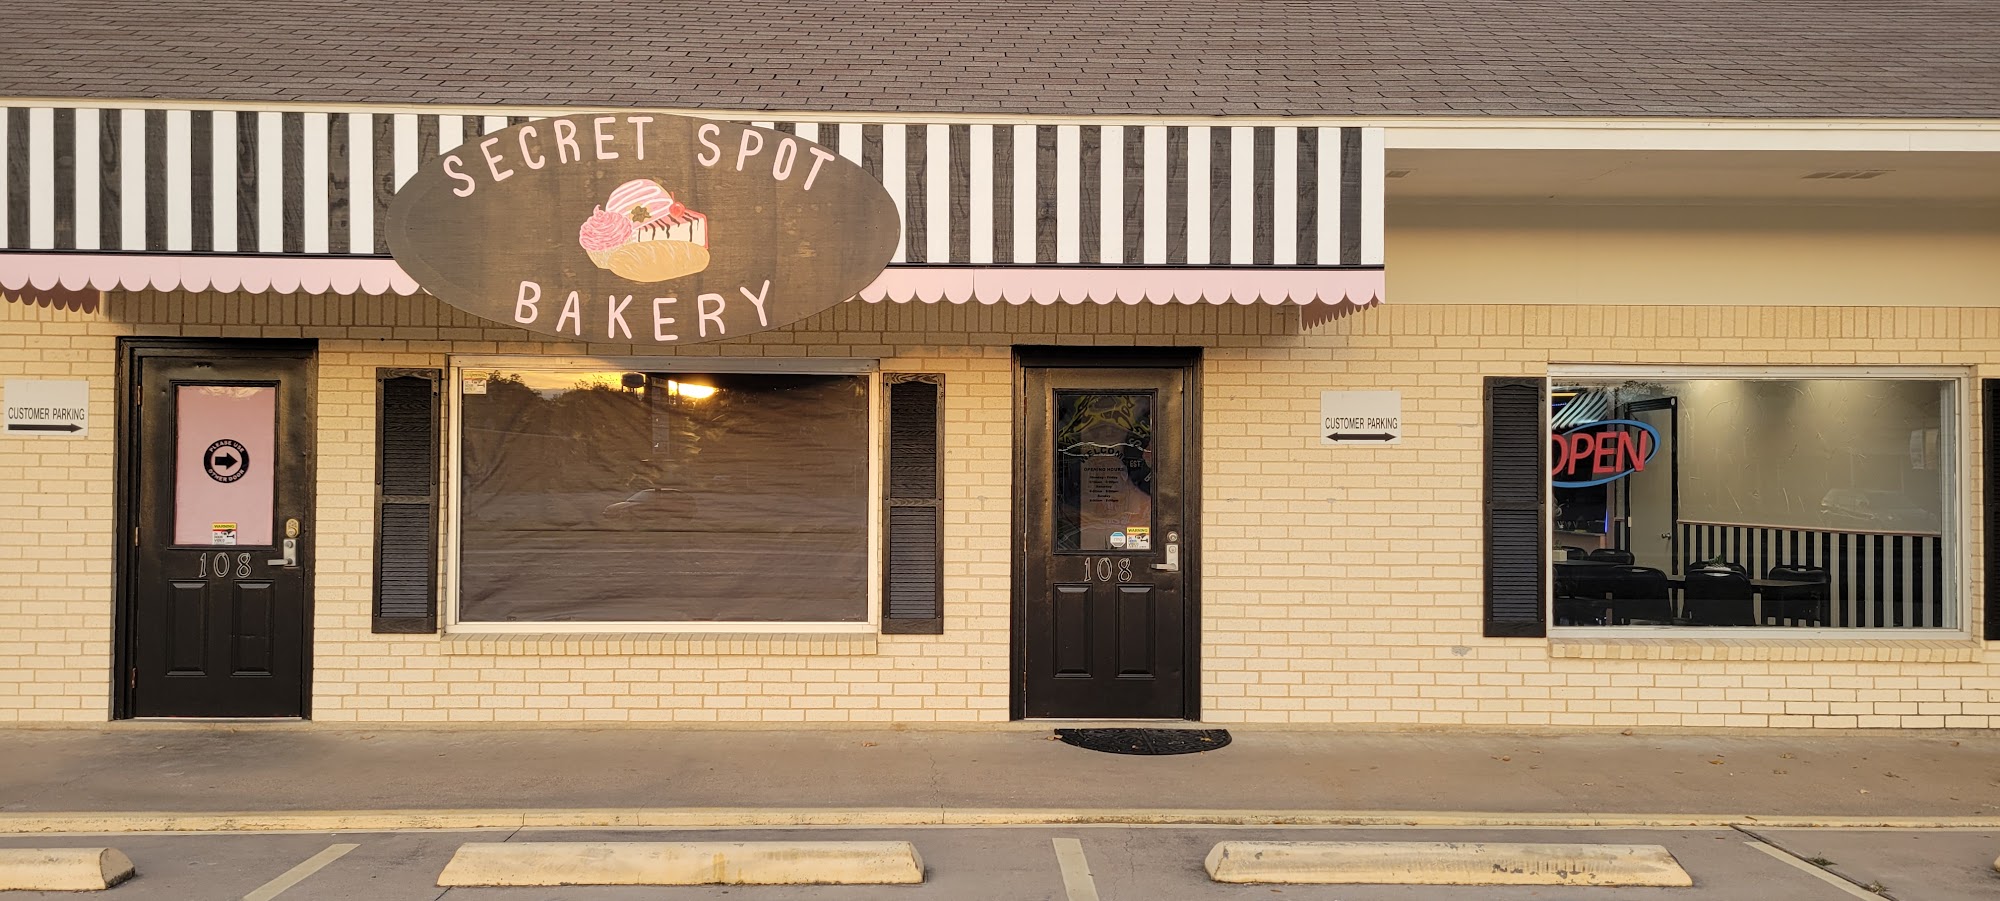 Secret Spot Bakery